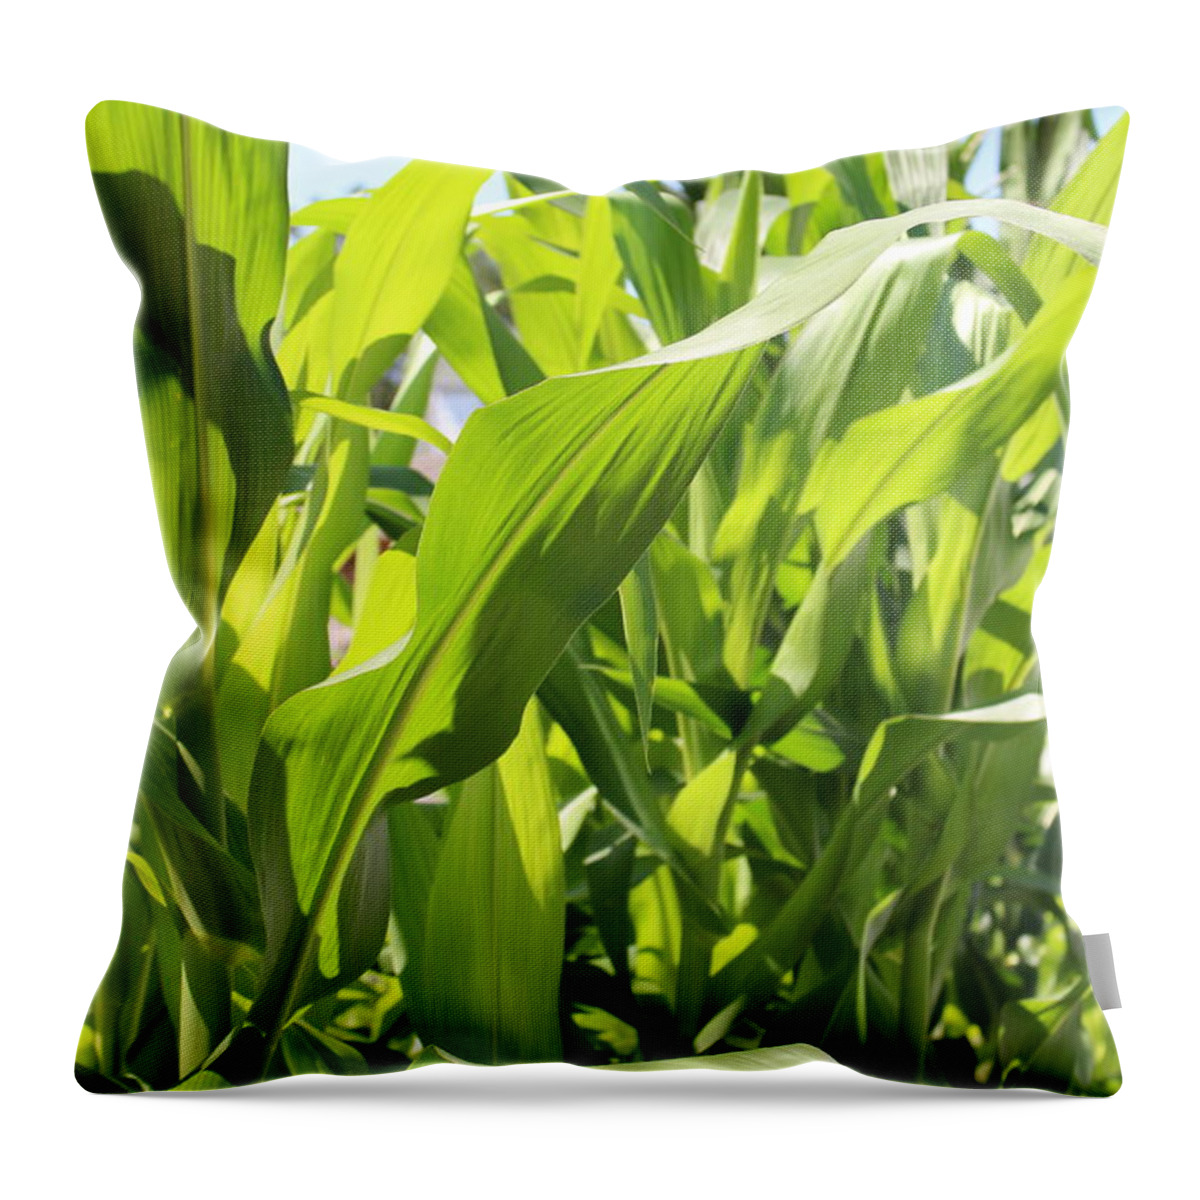 Sweet Corn Throw Pillow featuring the photograph Sweet Corn by Barbra Telfer